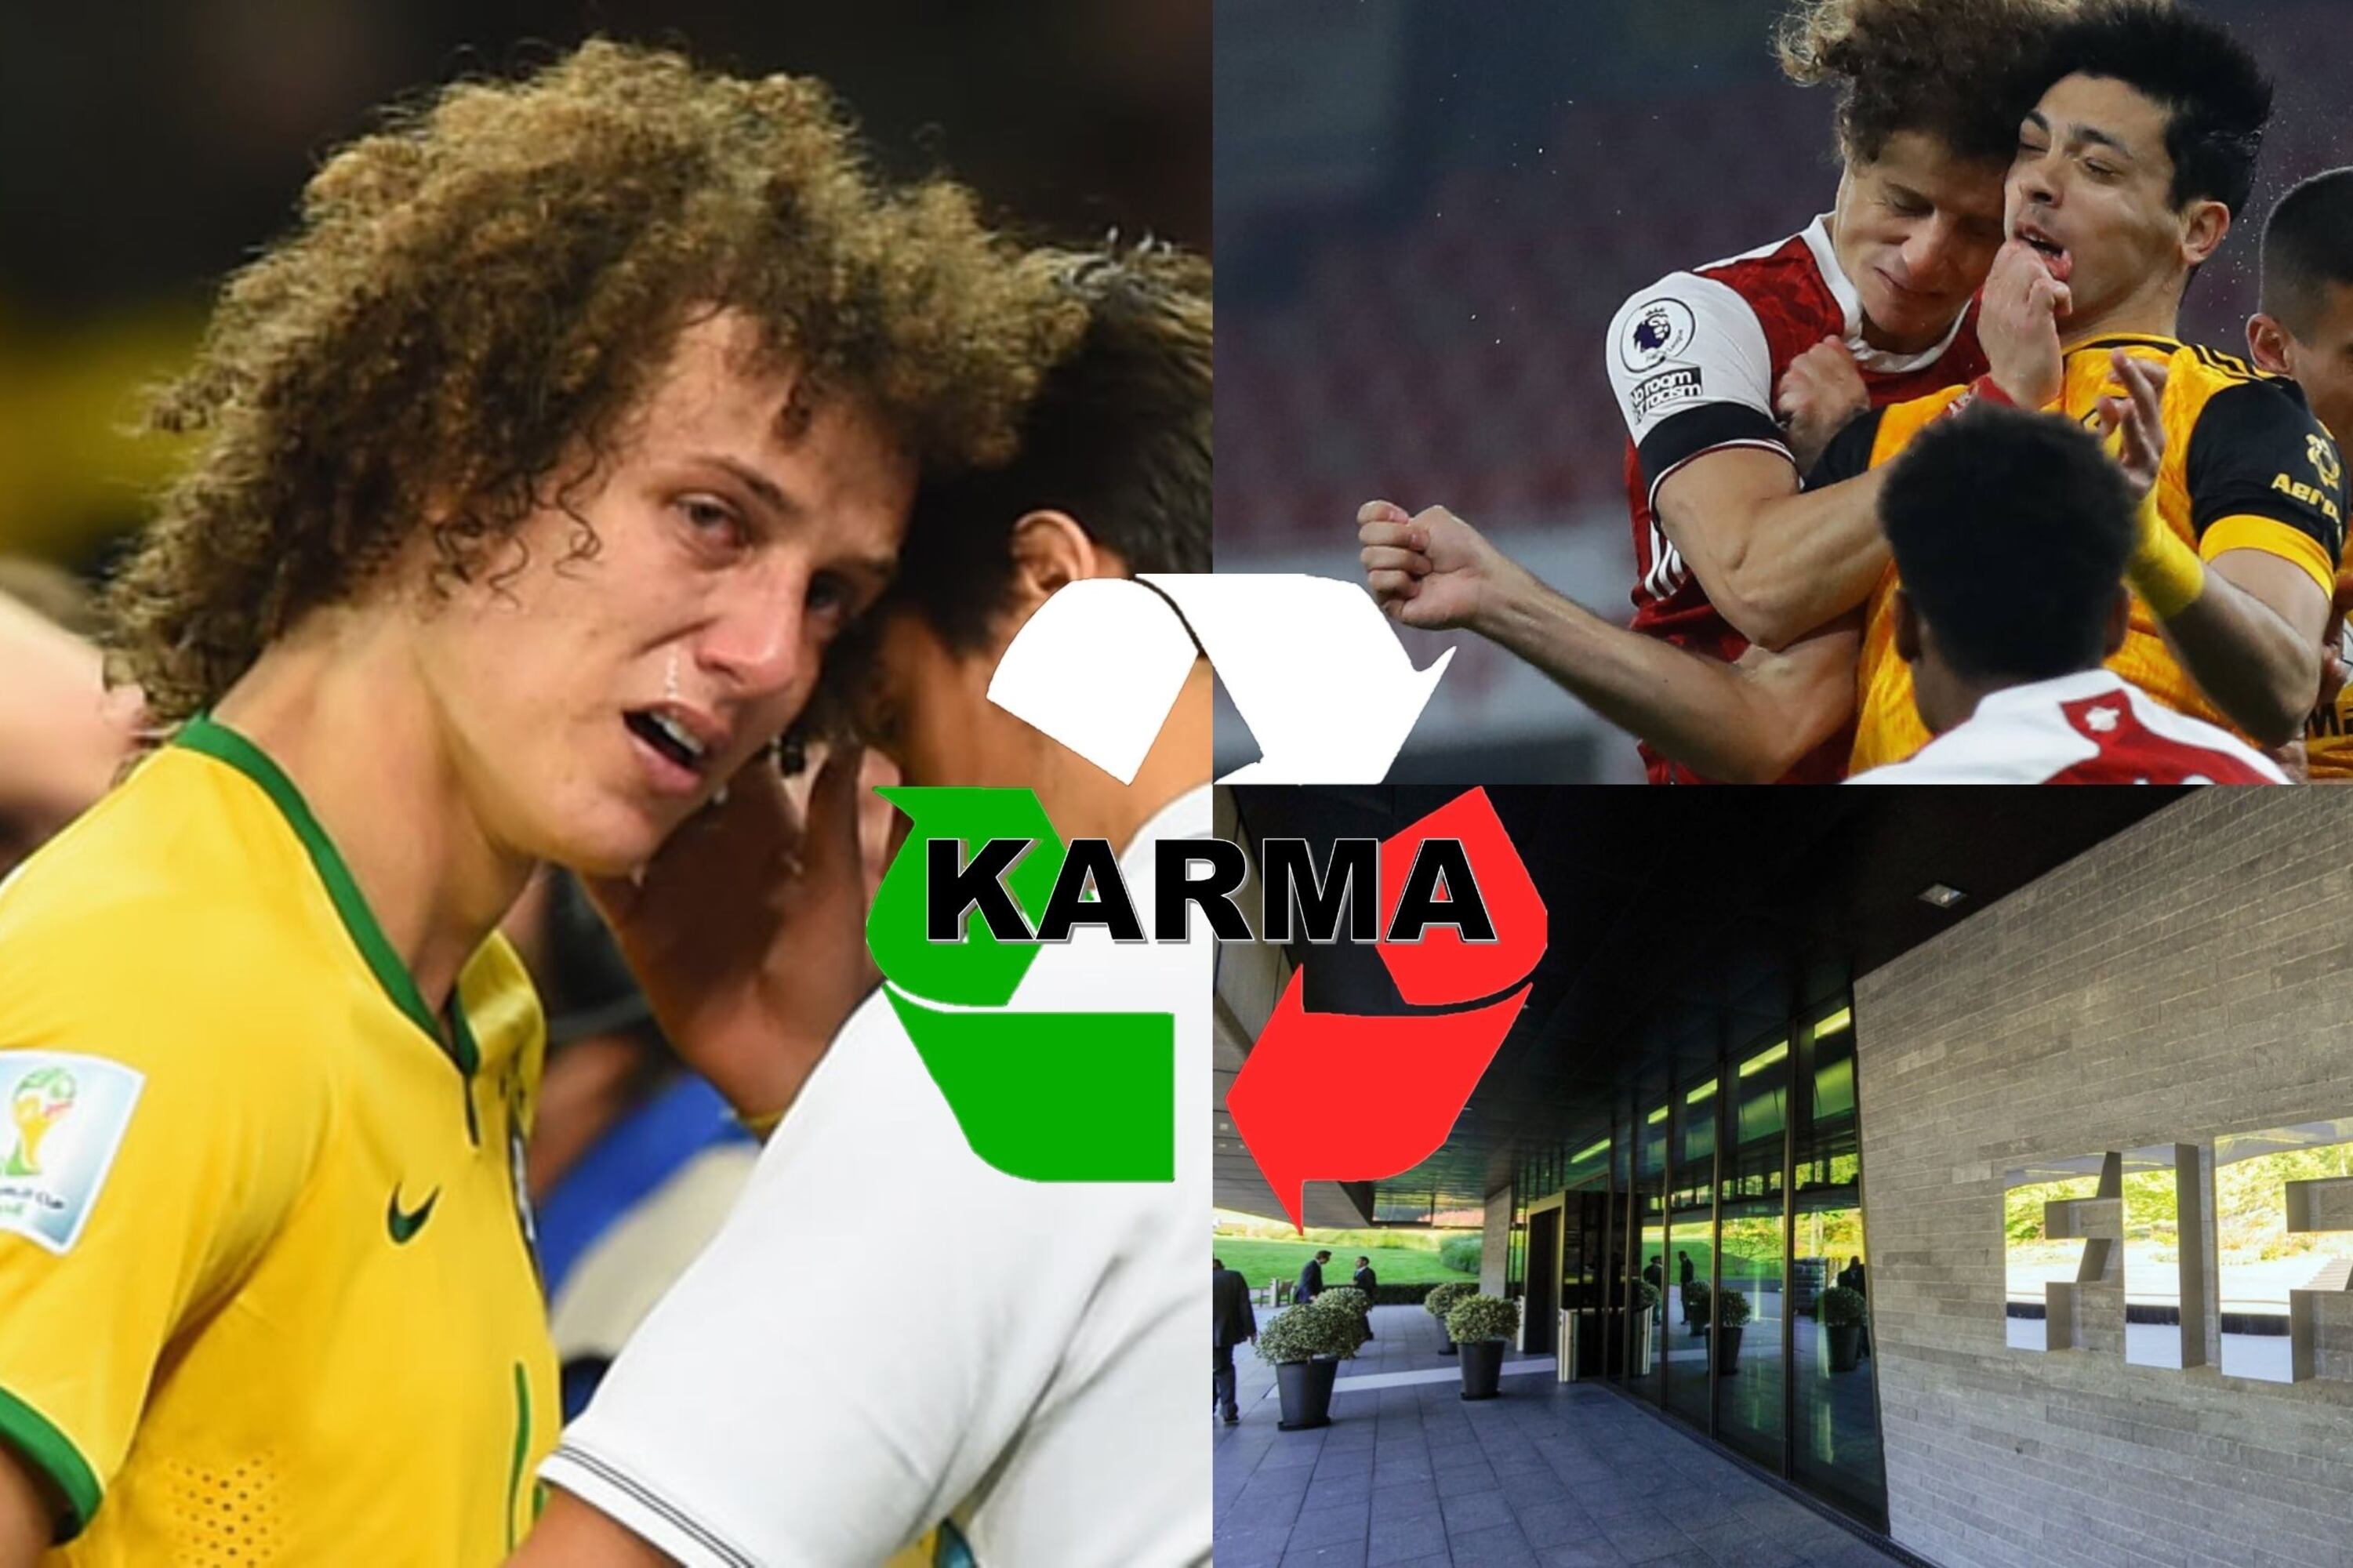 David Luiz cut Jimenez's career short, now he gets karma thanks to FIFA